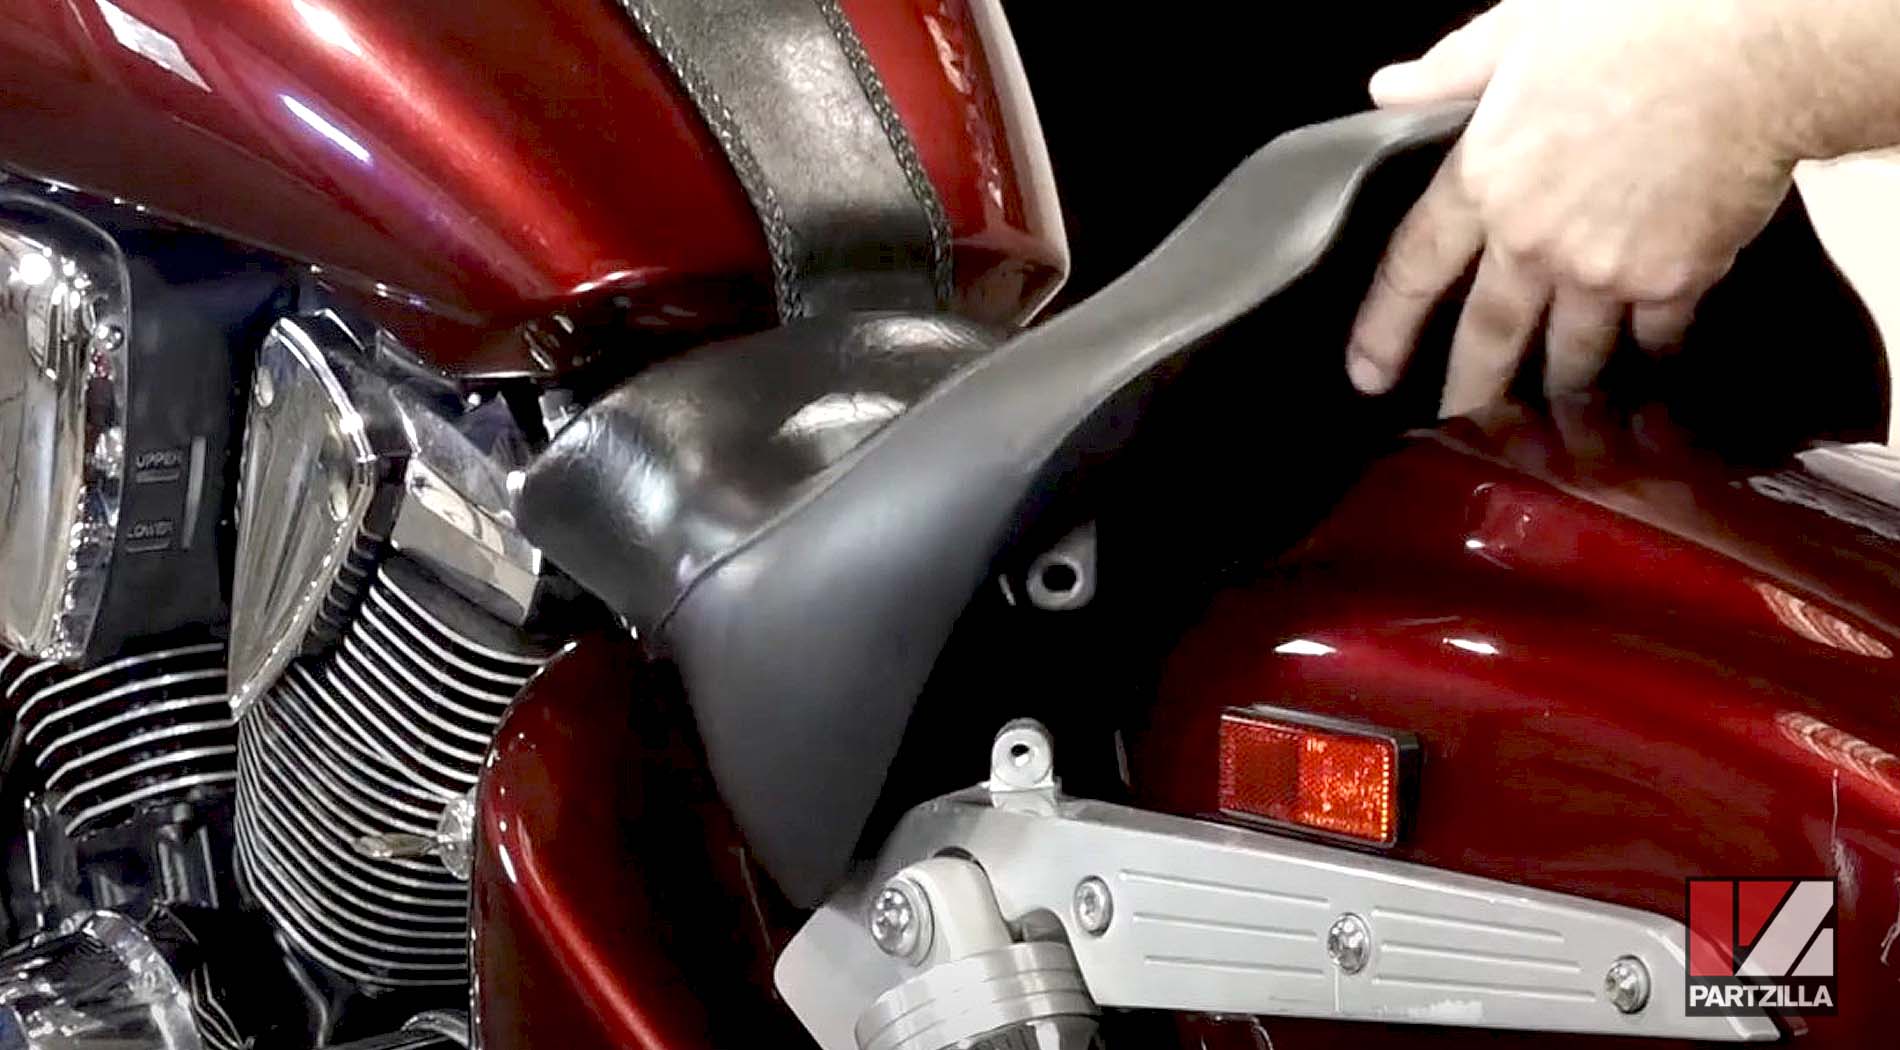 2005 Honda VTX 1800 motorcycle troubleshooting battery problems